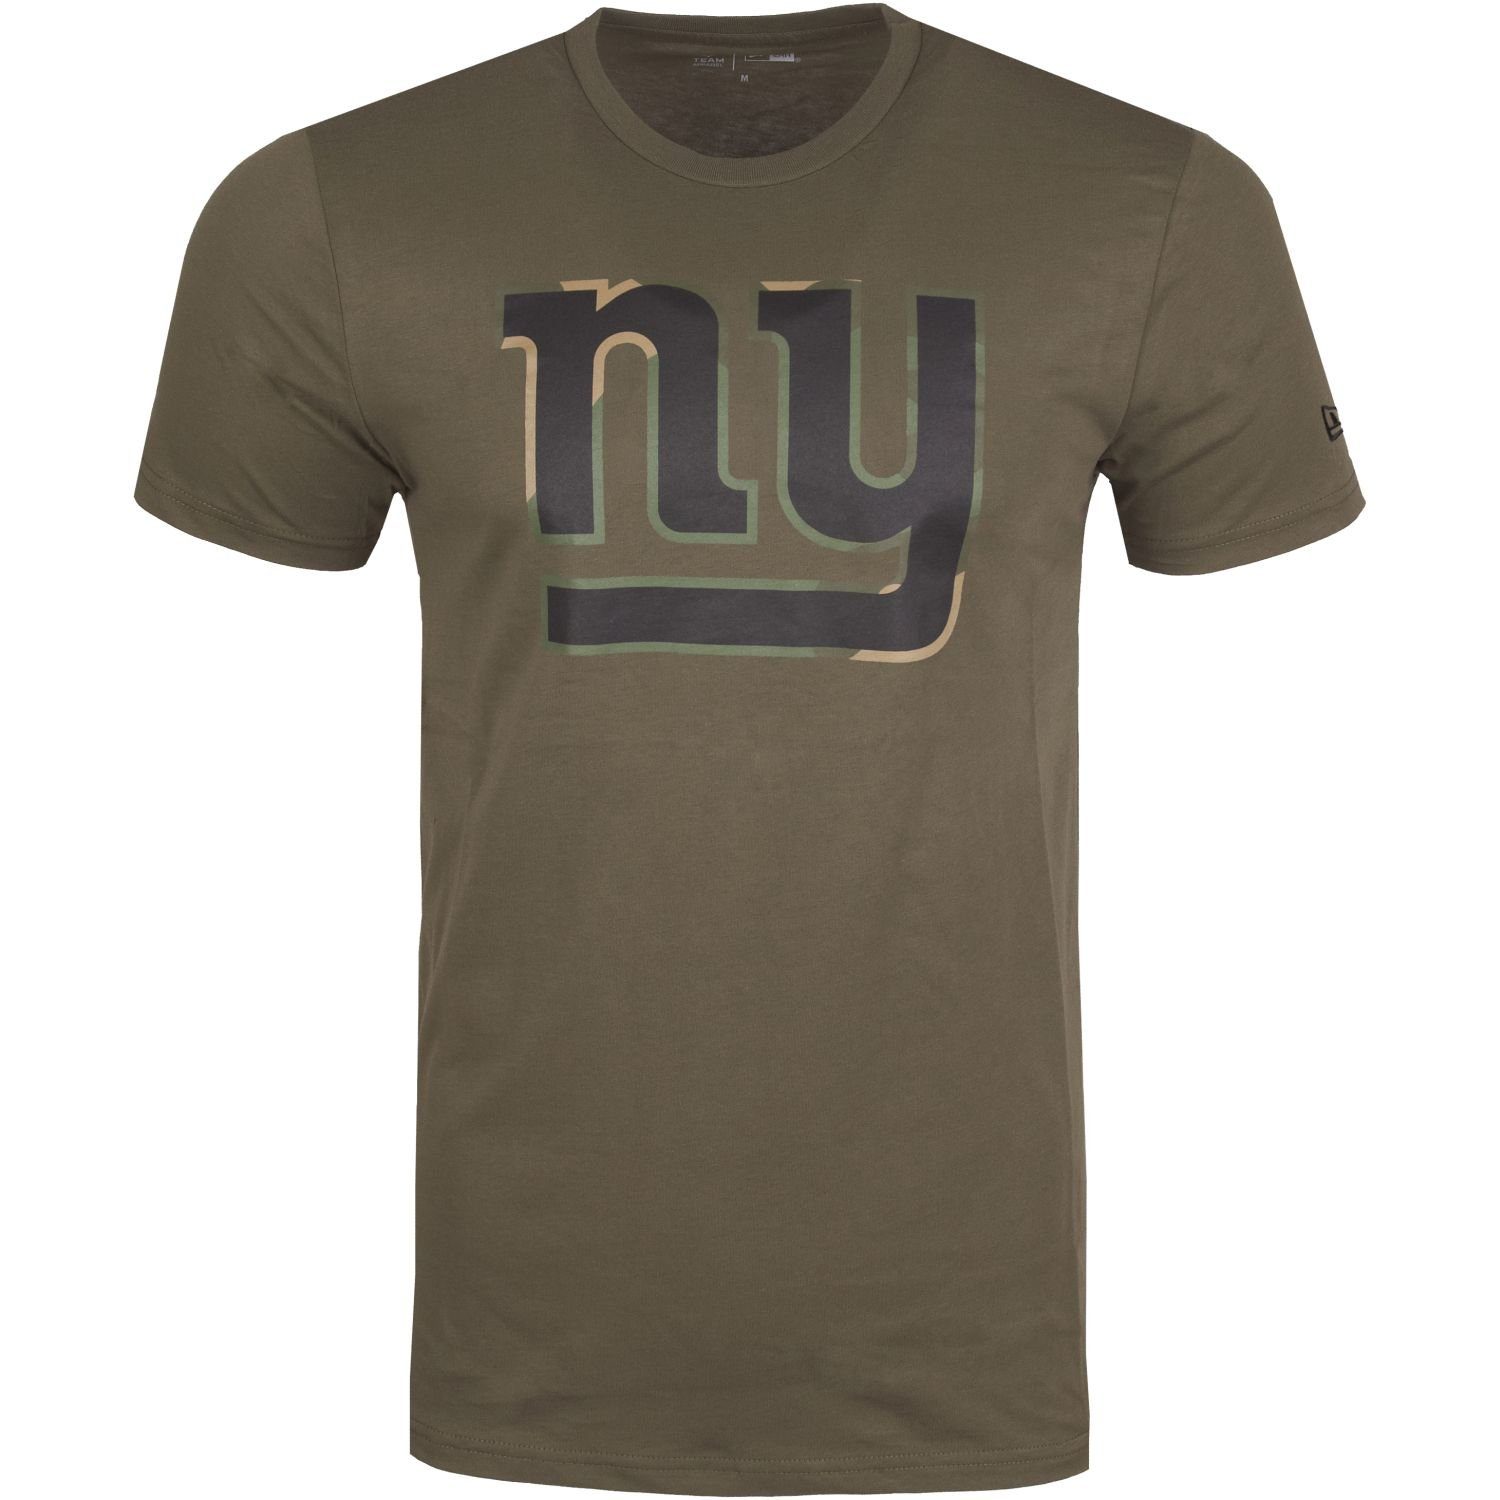 New Logo York Print-Shirt Era Team Giants oliv New NFL